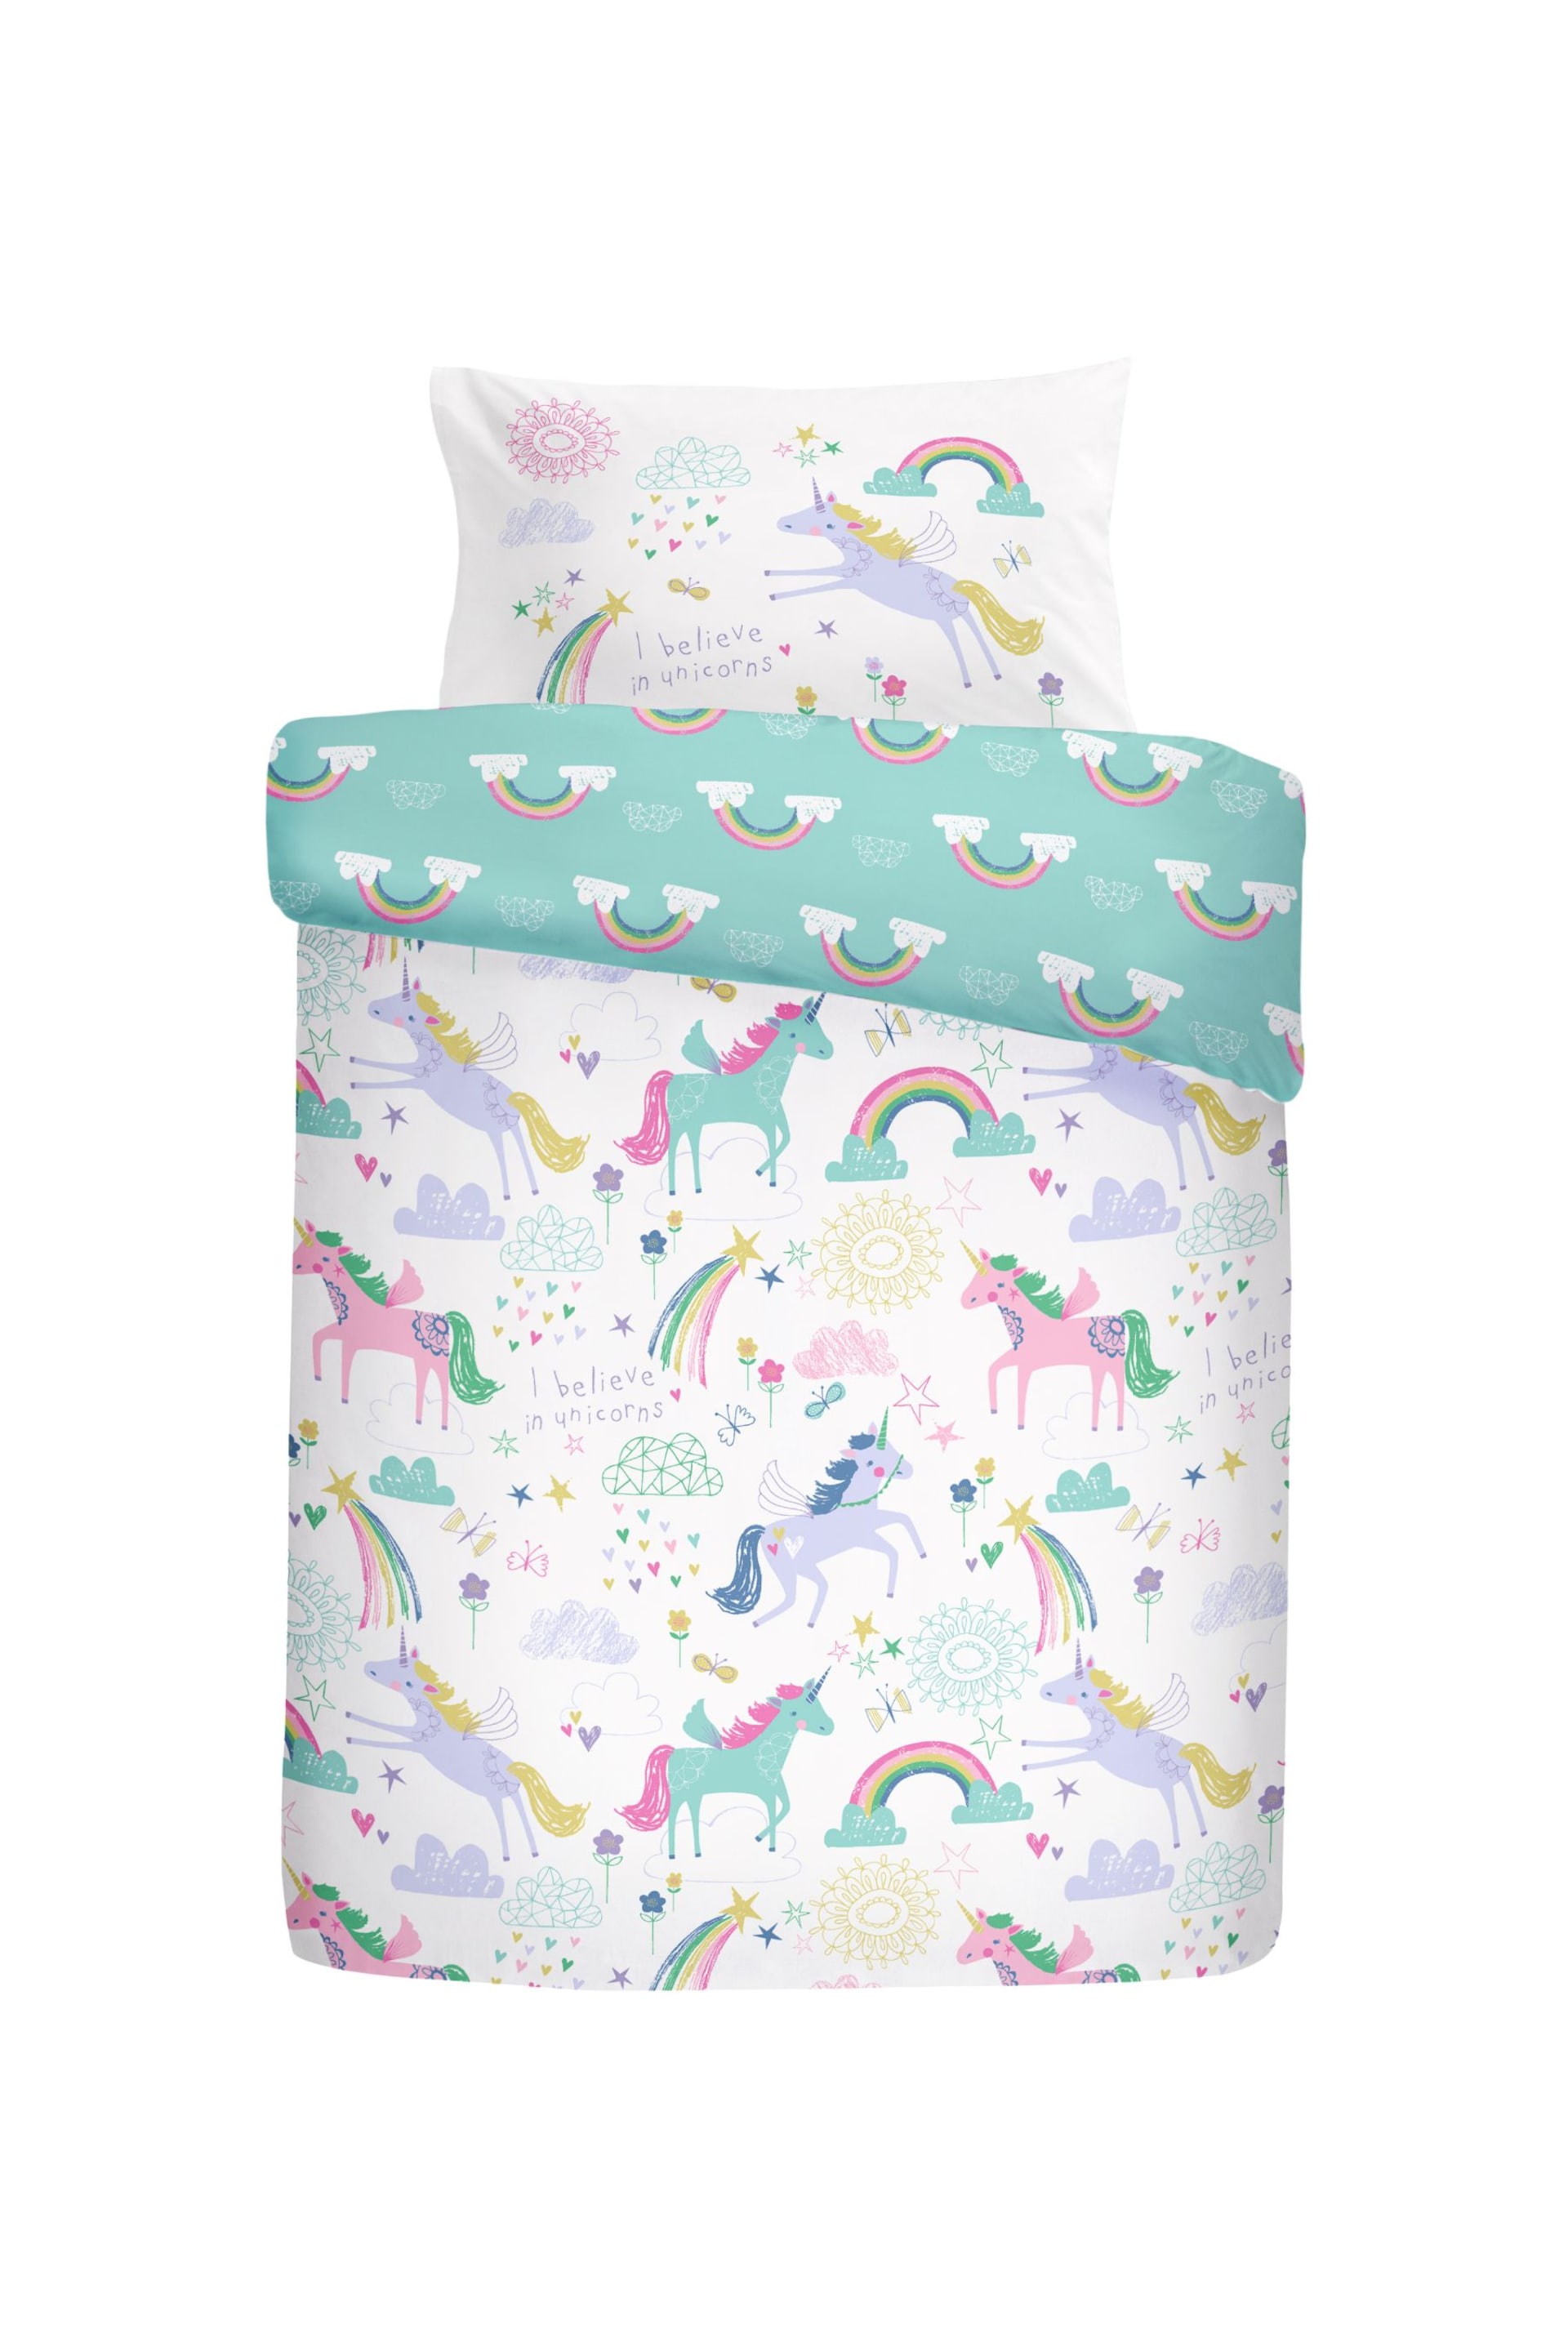 Bedlam White/Green Rainbow Unicorn Duvet Cover and Pillowcase Set - Image 5 of 5